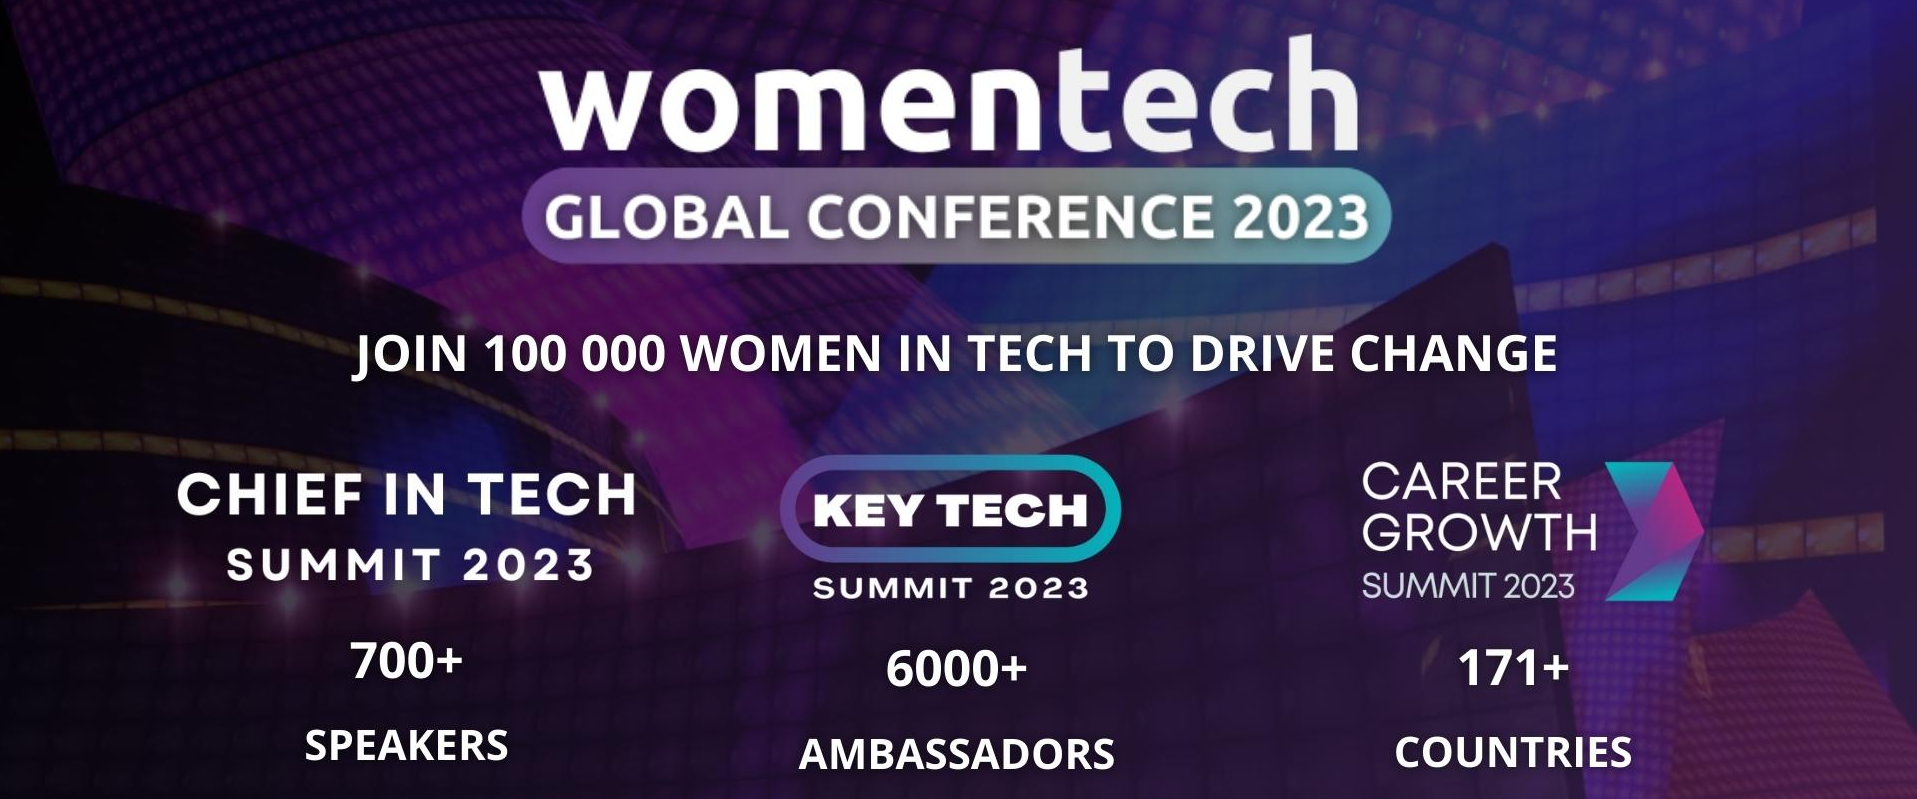 Women in Tech Global Conference 2023